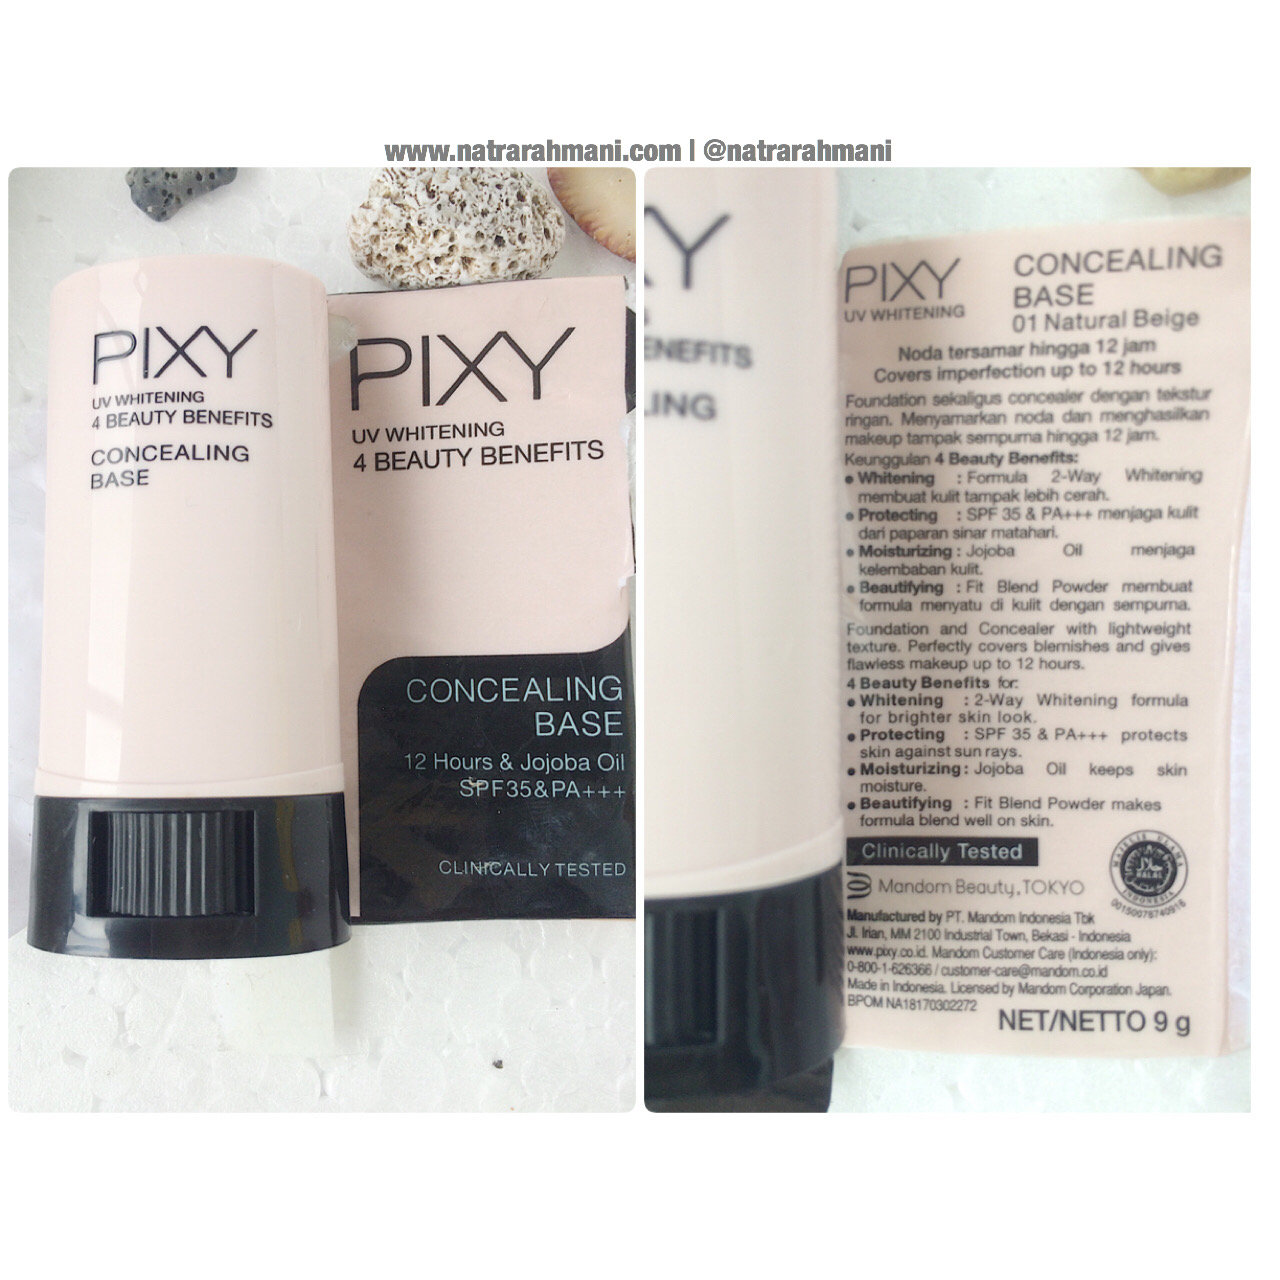 pixy-4-beauty-benefits-base-make-up-concealing-base-natrarahmani